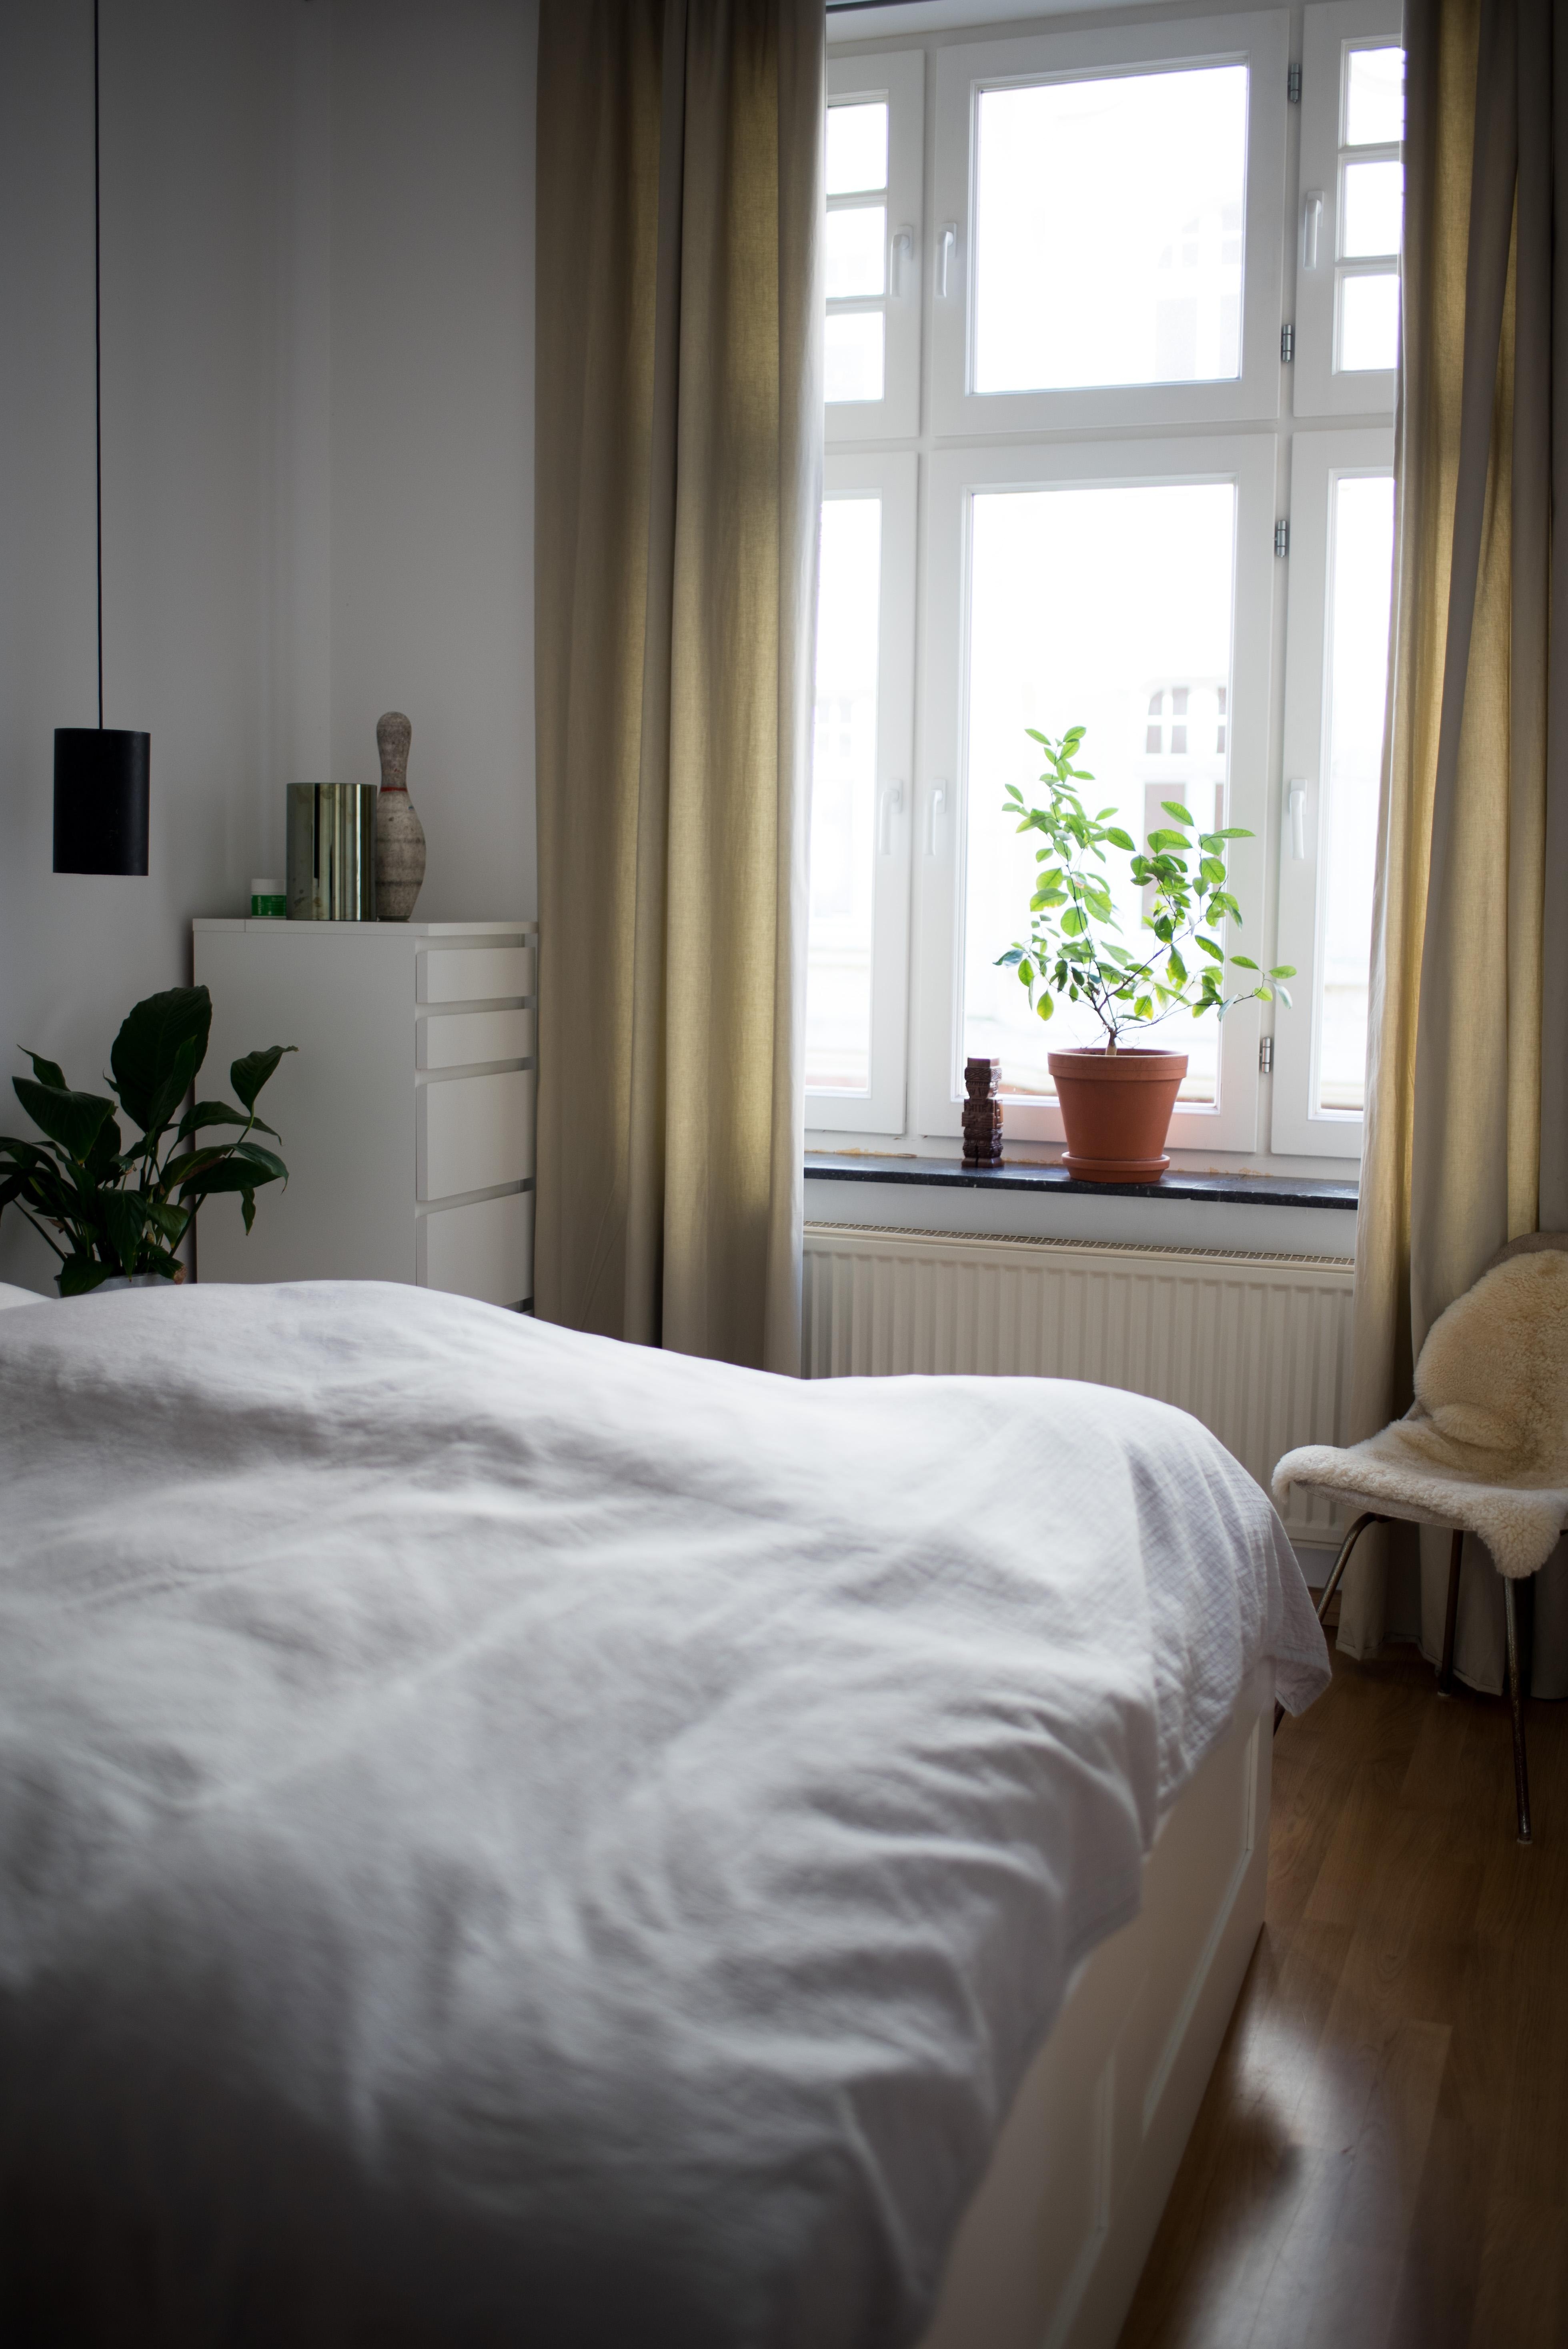 Guten Morgen - trotz Regen! #bedroom #schlafzimmer #interior #altbau #interiorinspo 